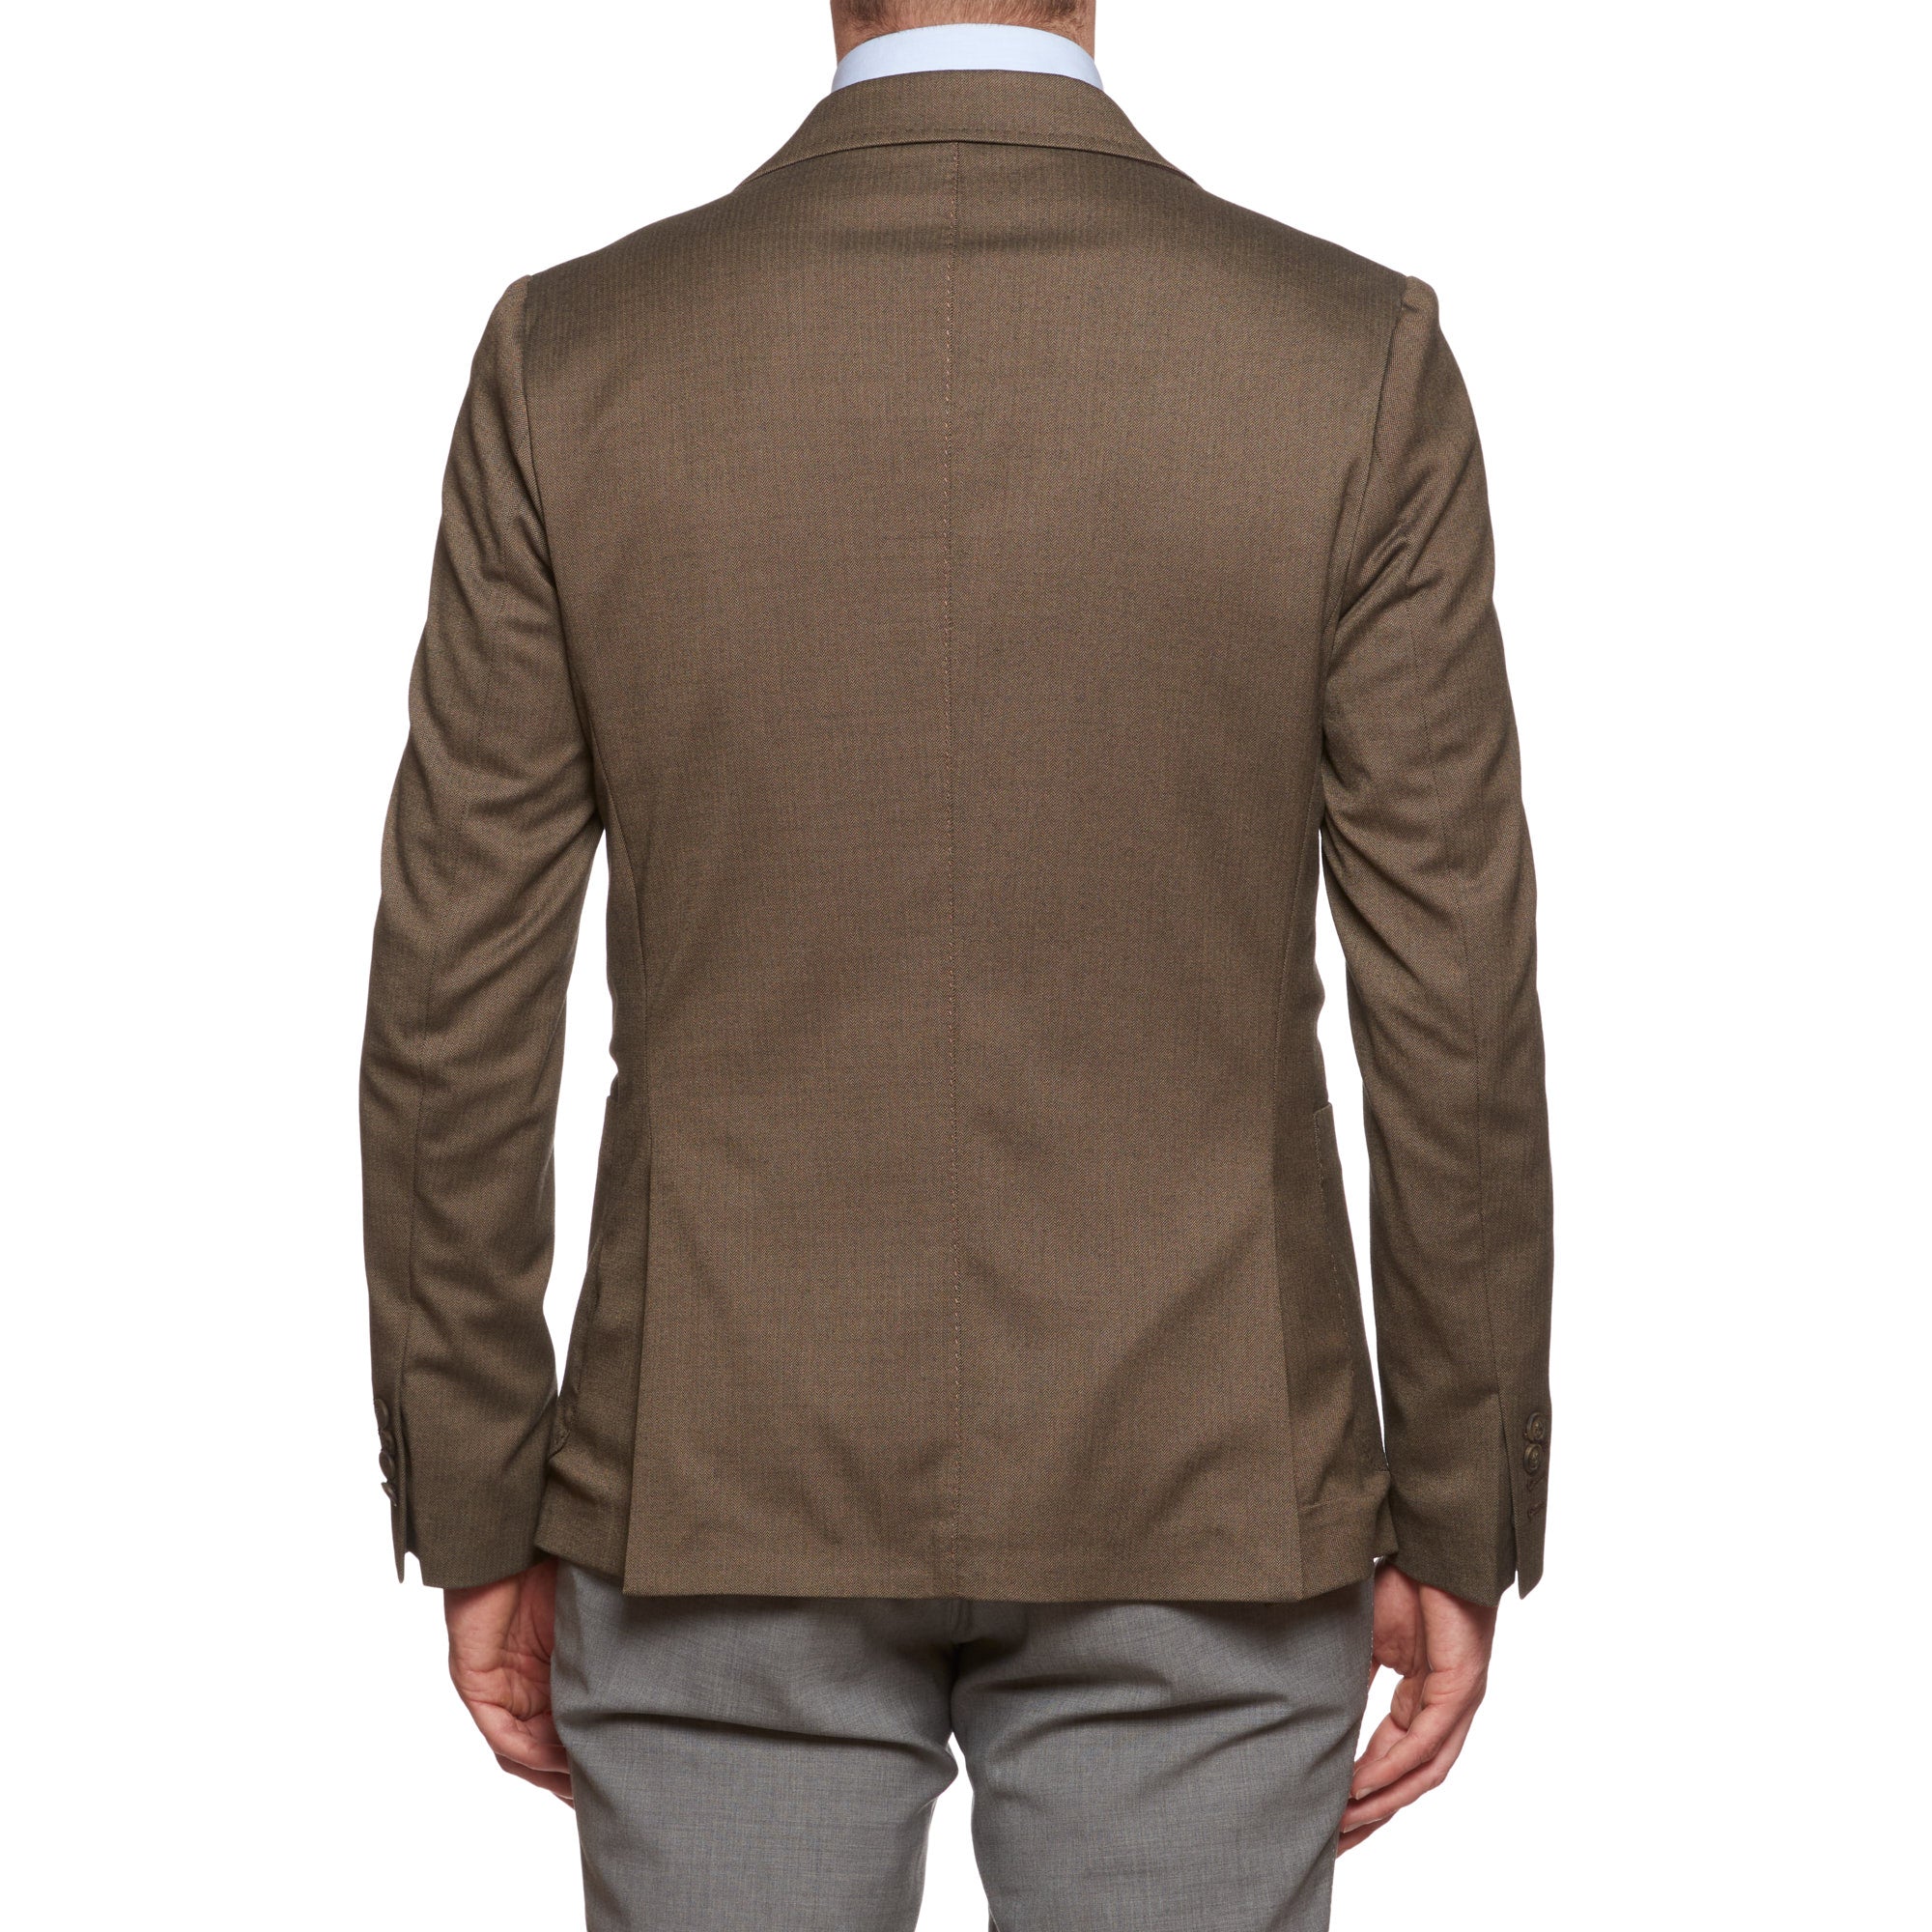 VINCENZO PALUMBO "Alfred" Tan Herringbone Wool Jacket EU 48 NEW US 36 Slim Fit